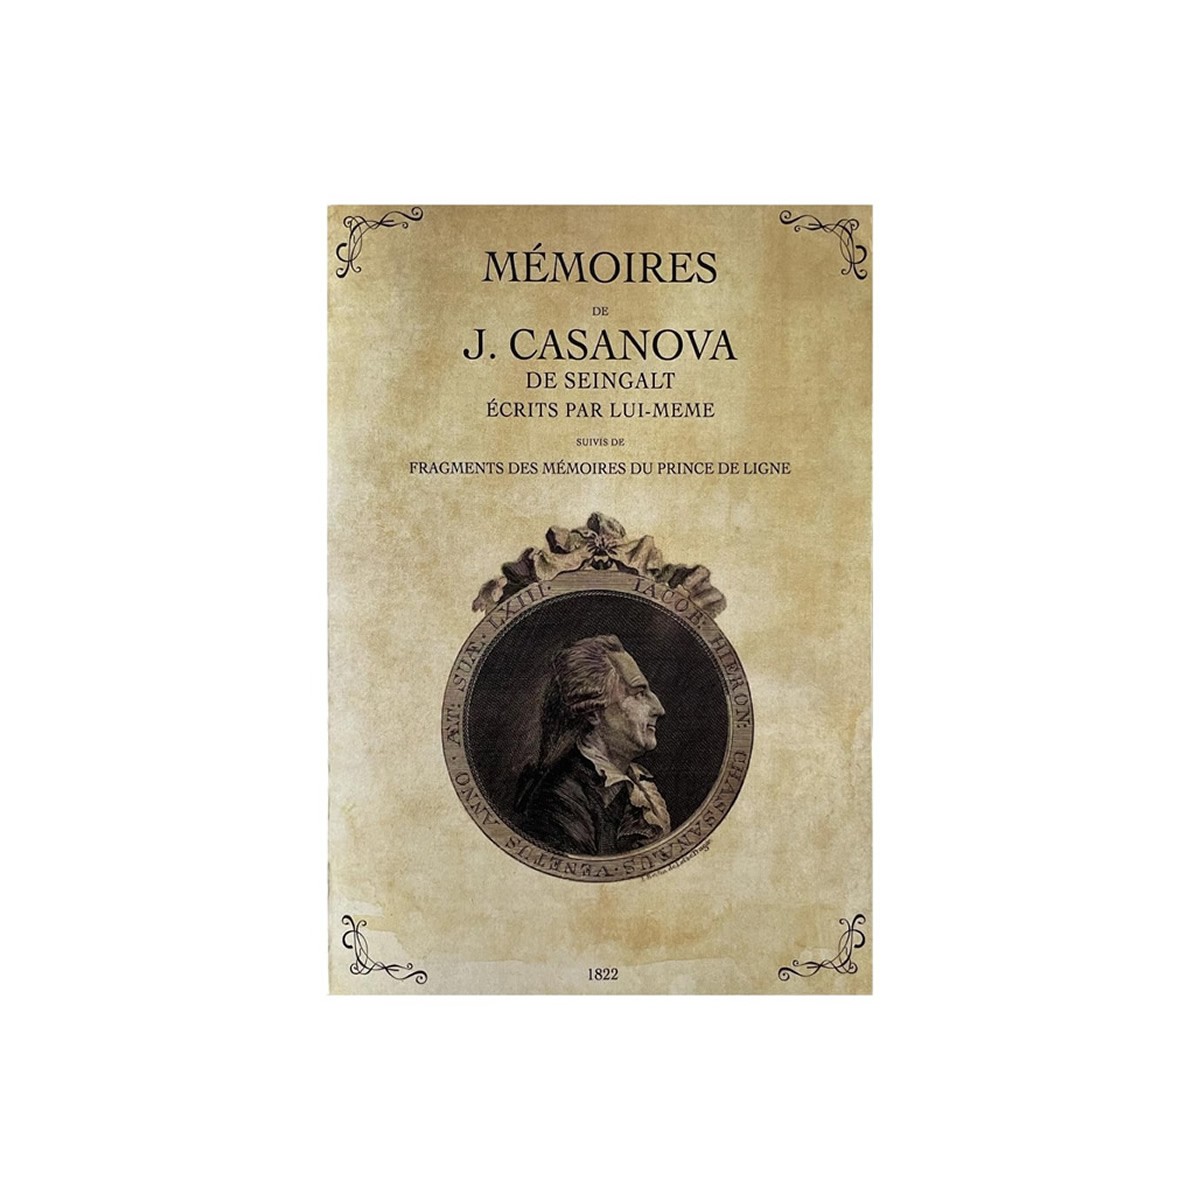 Libri muti Memoires de J. Casanova - Σημειωματάριο